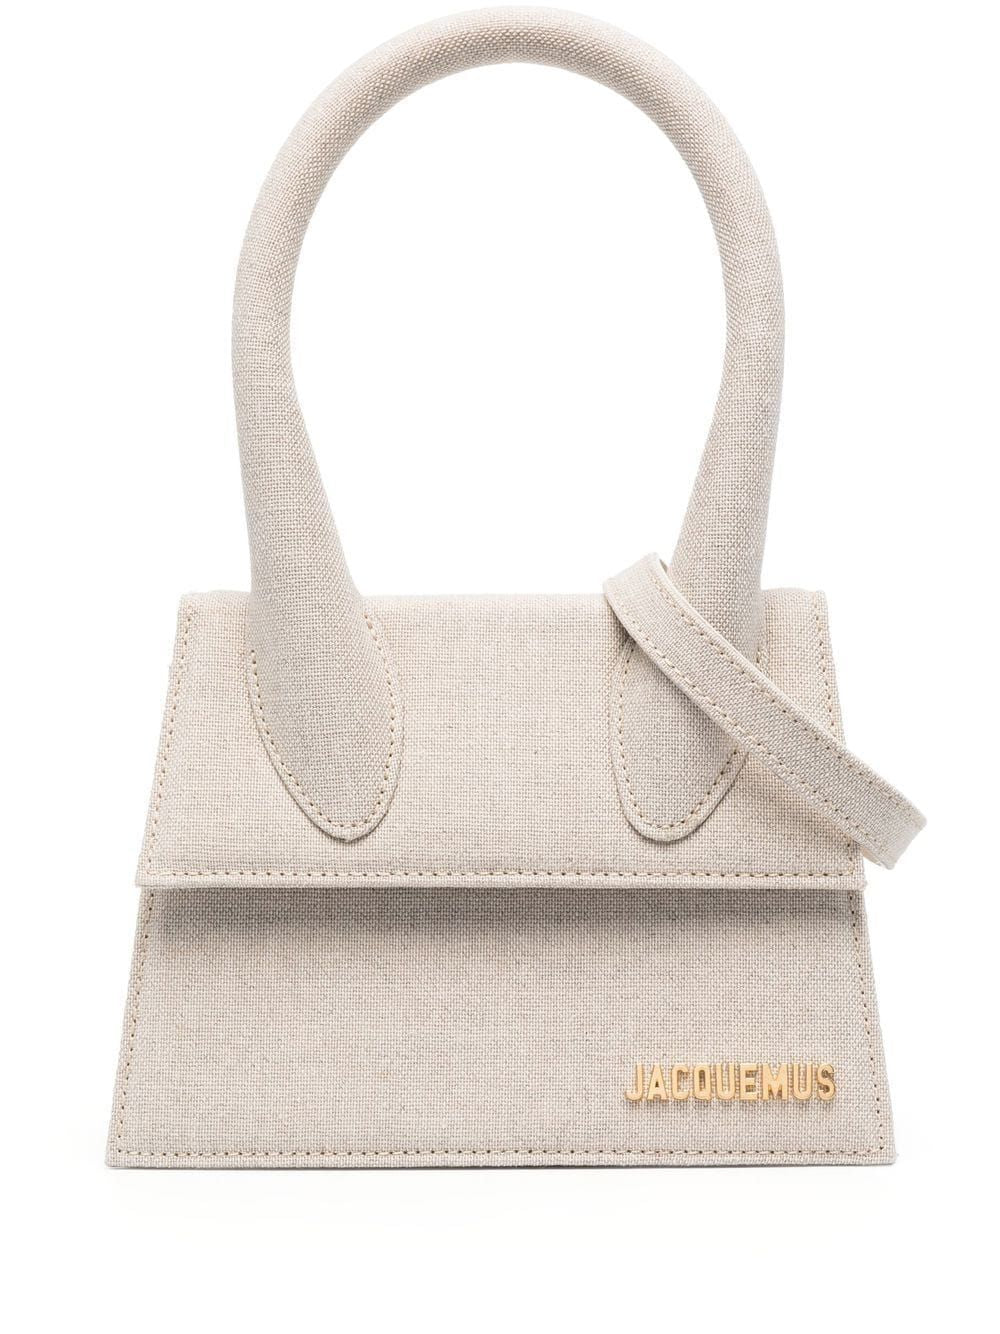 JACQUEMUS Beige Top-Handle Handbag with Adjustable Shoulder Strap and Magnetic Flap - Women's Fashion Bag